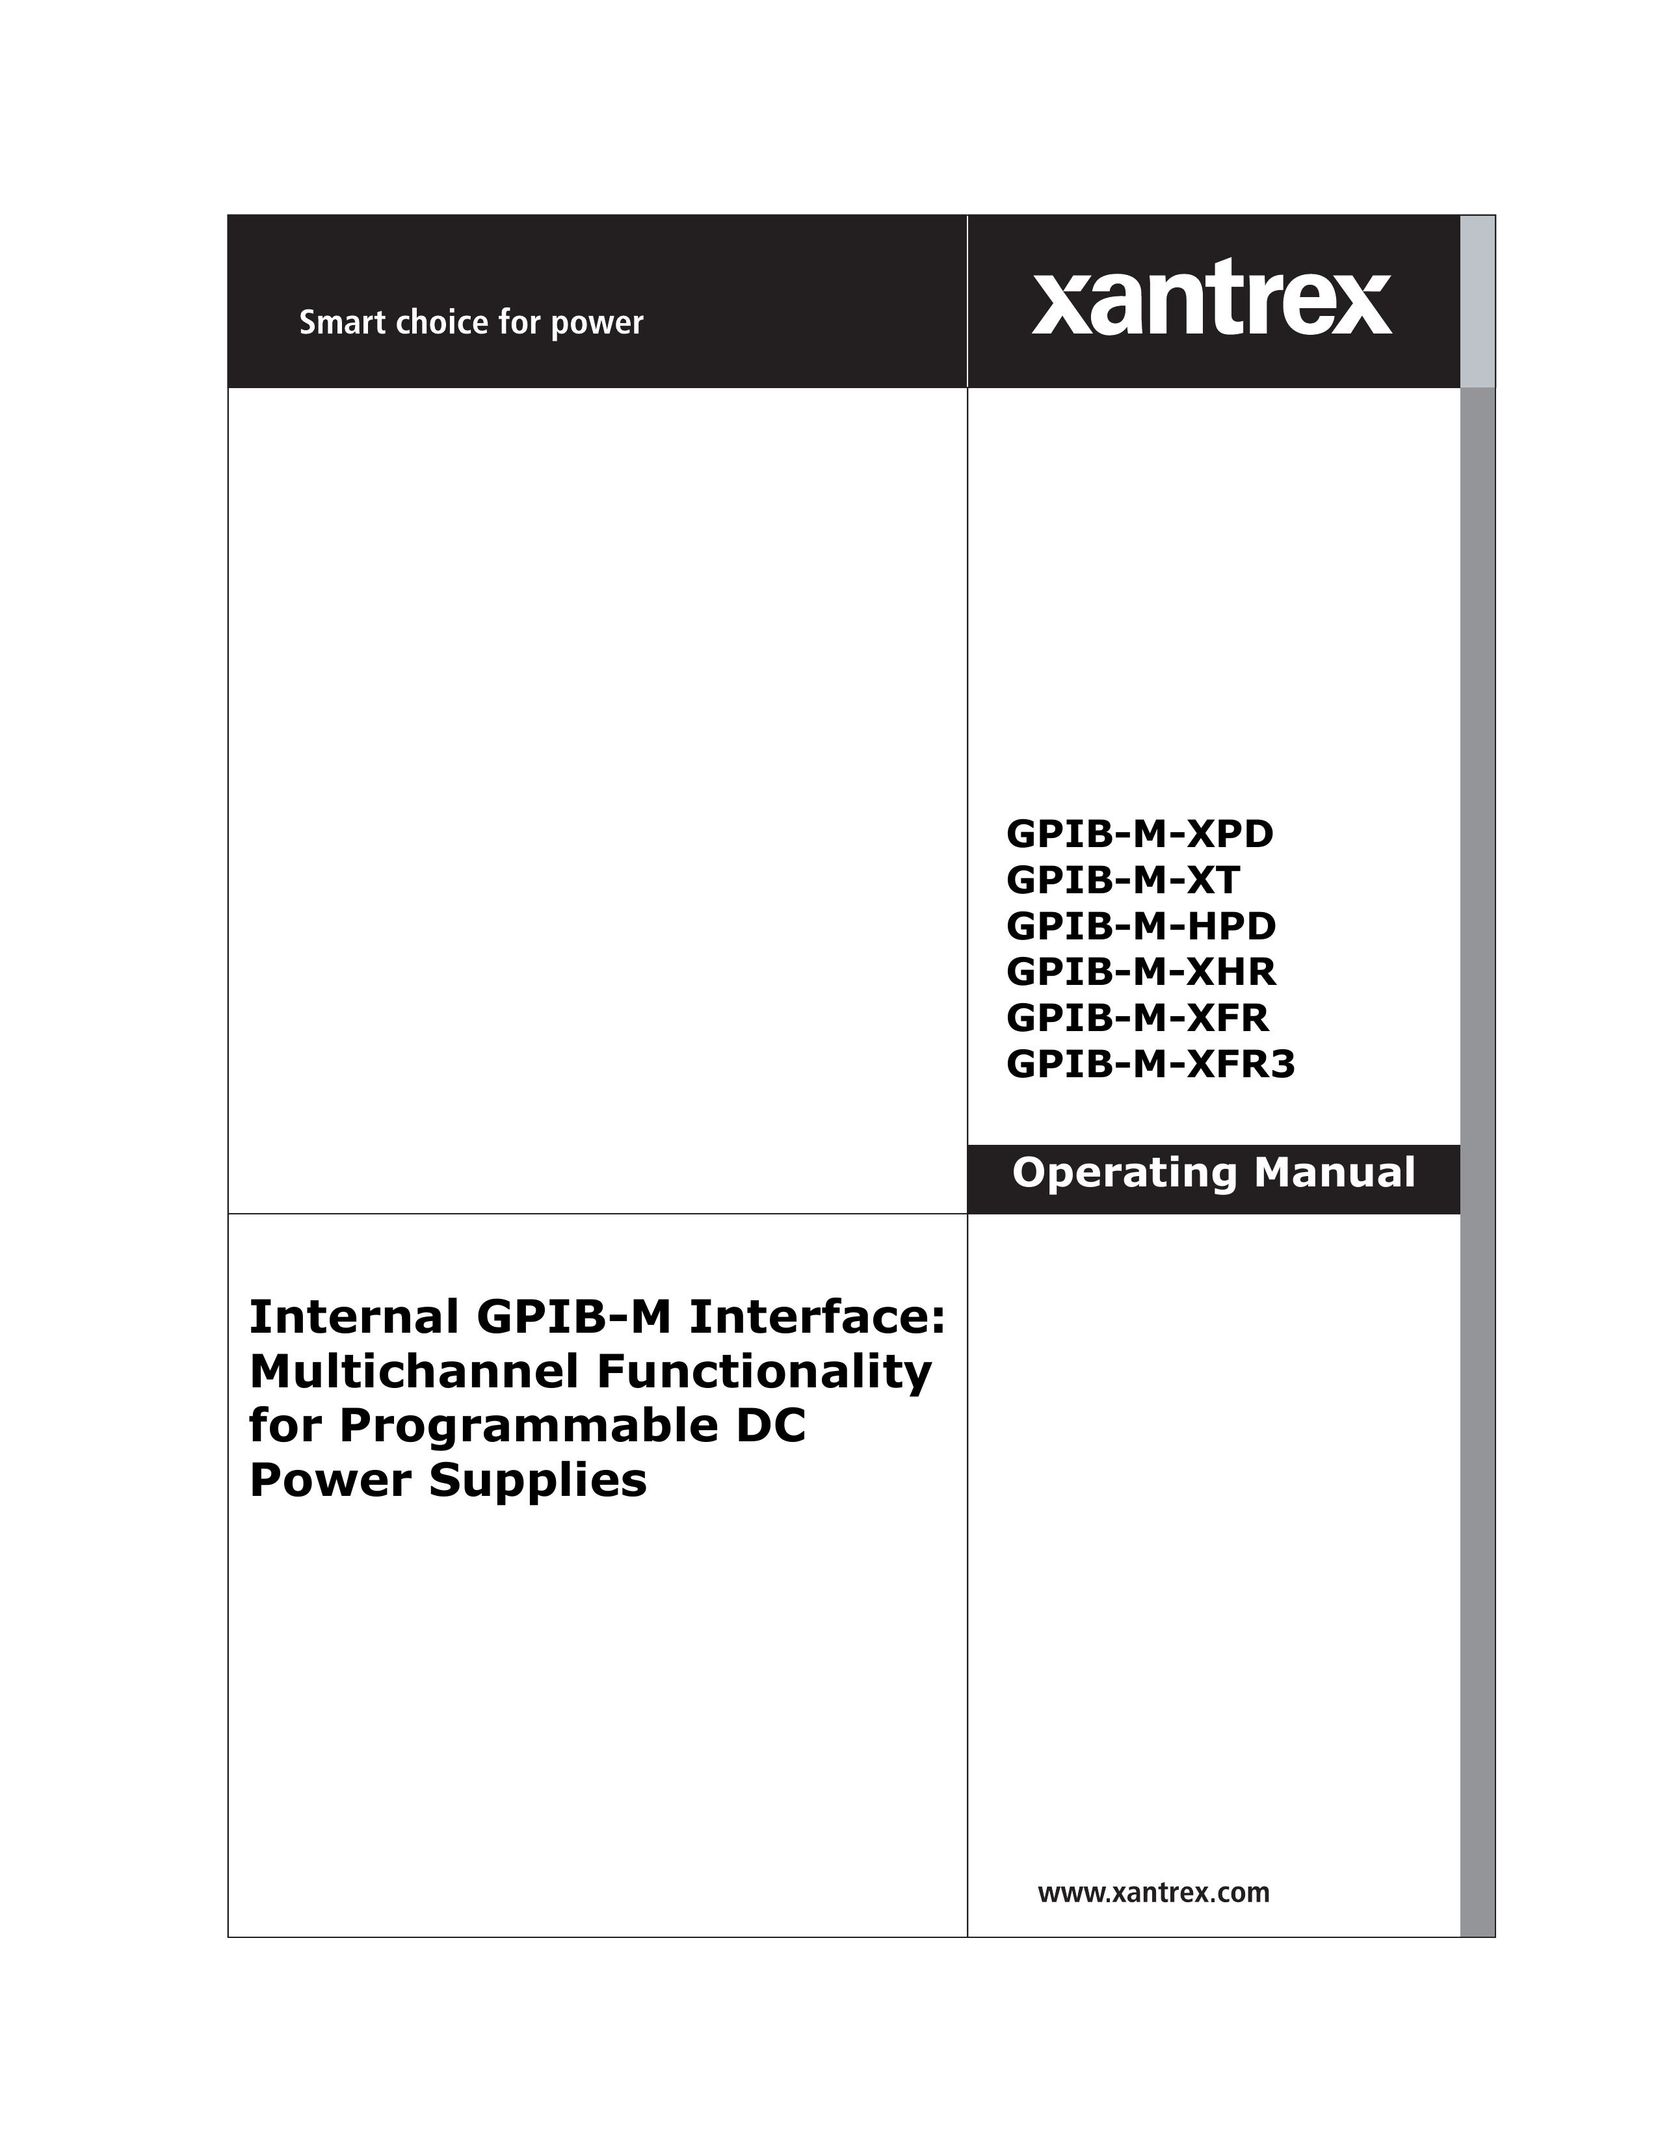 Xantrex Technology GPIB-M-XFR3 Power Supply User Manual